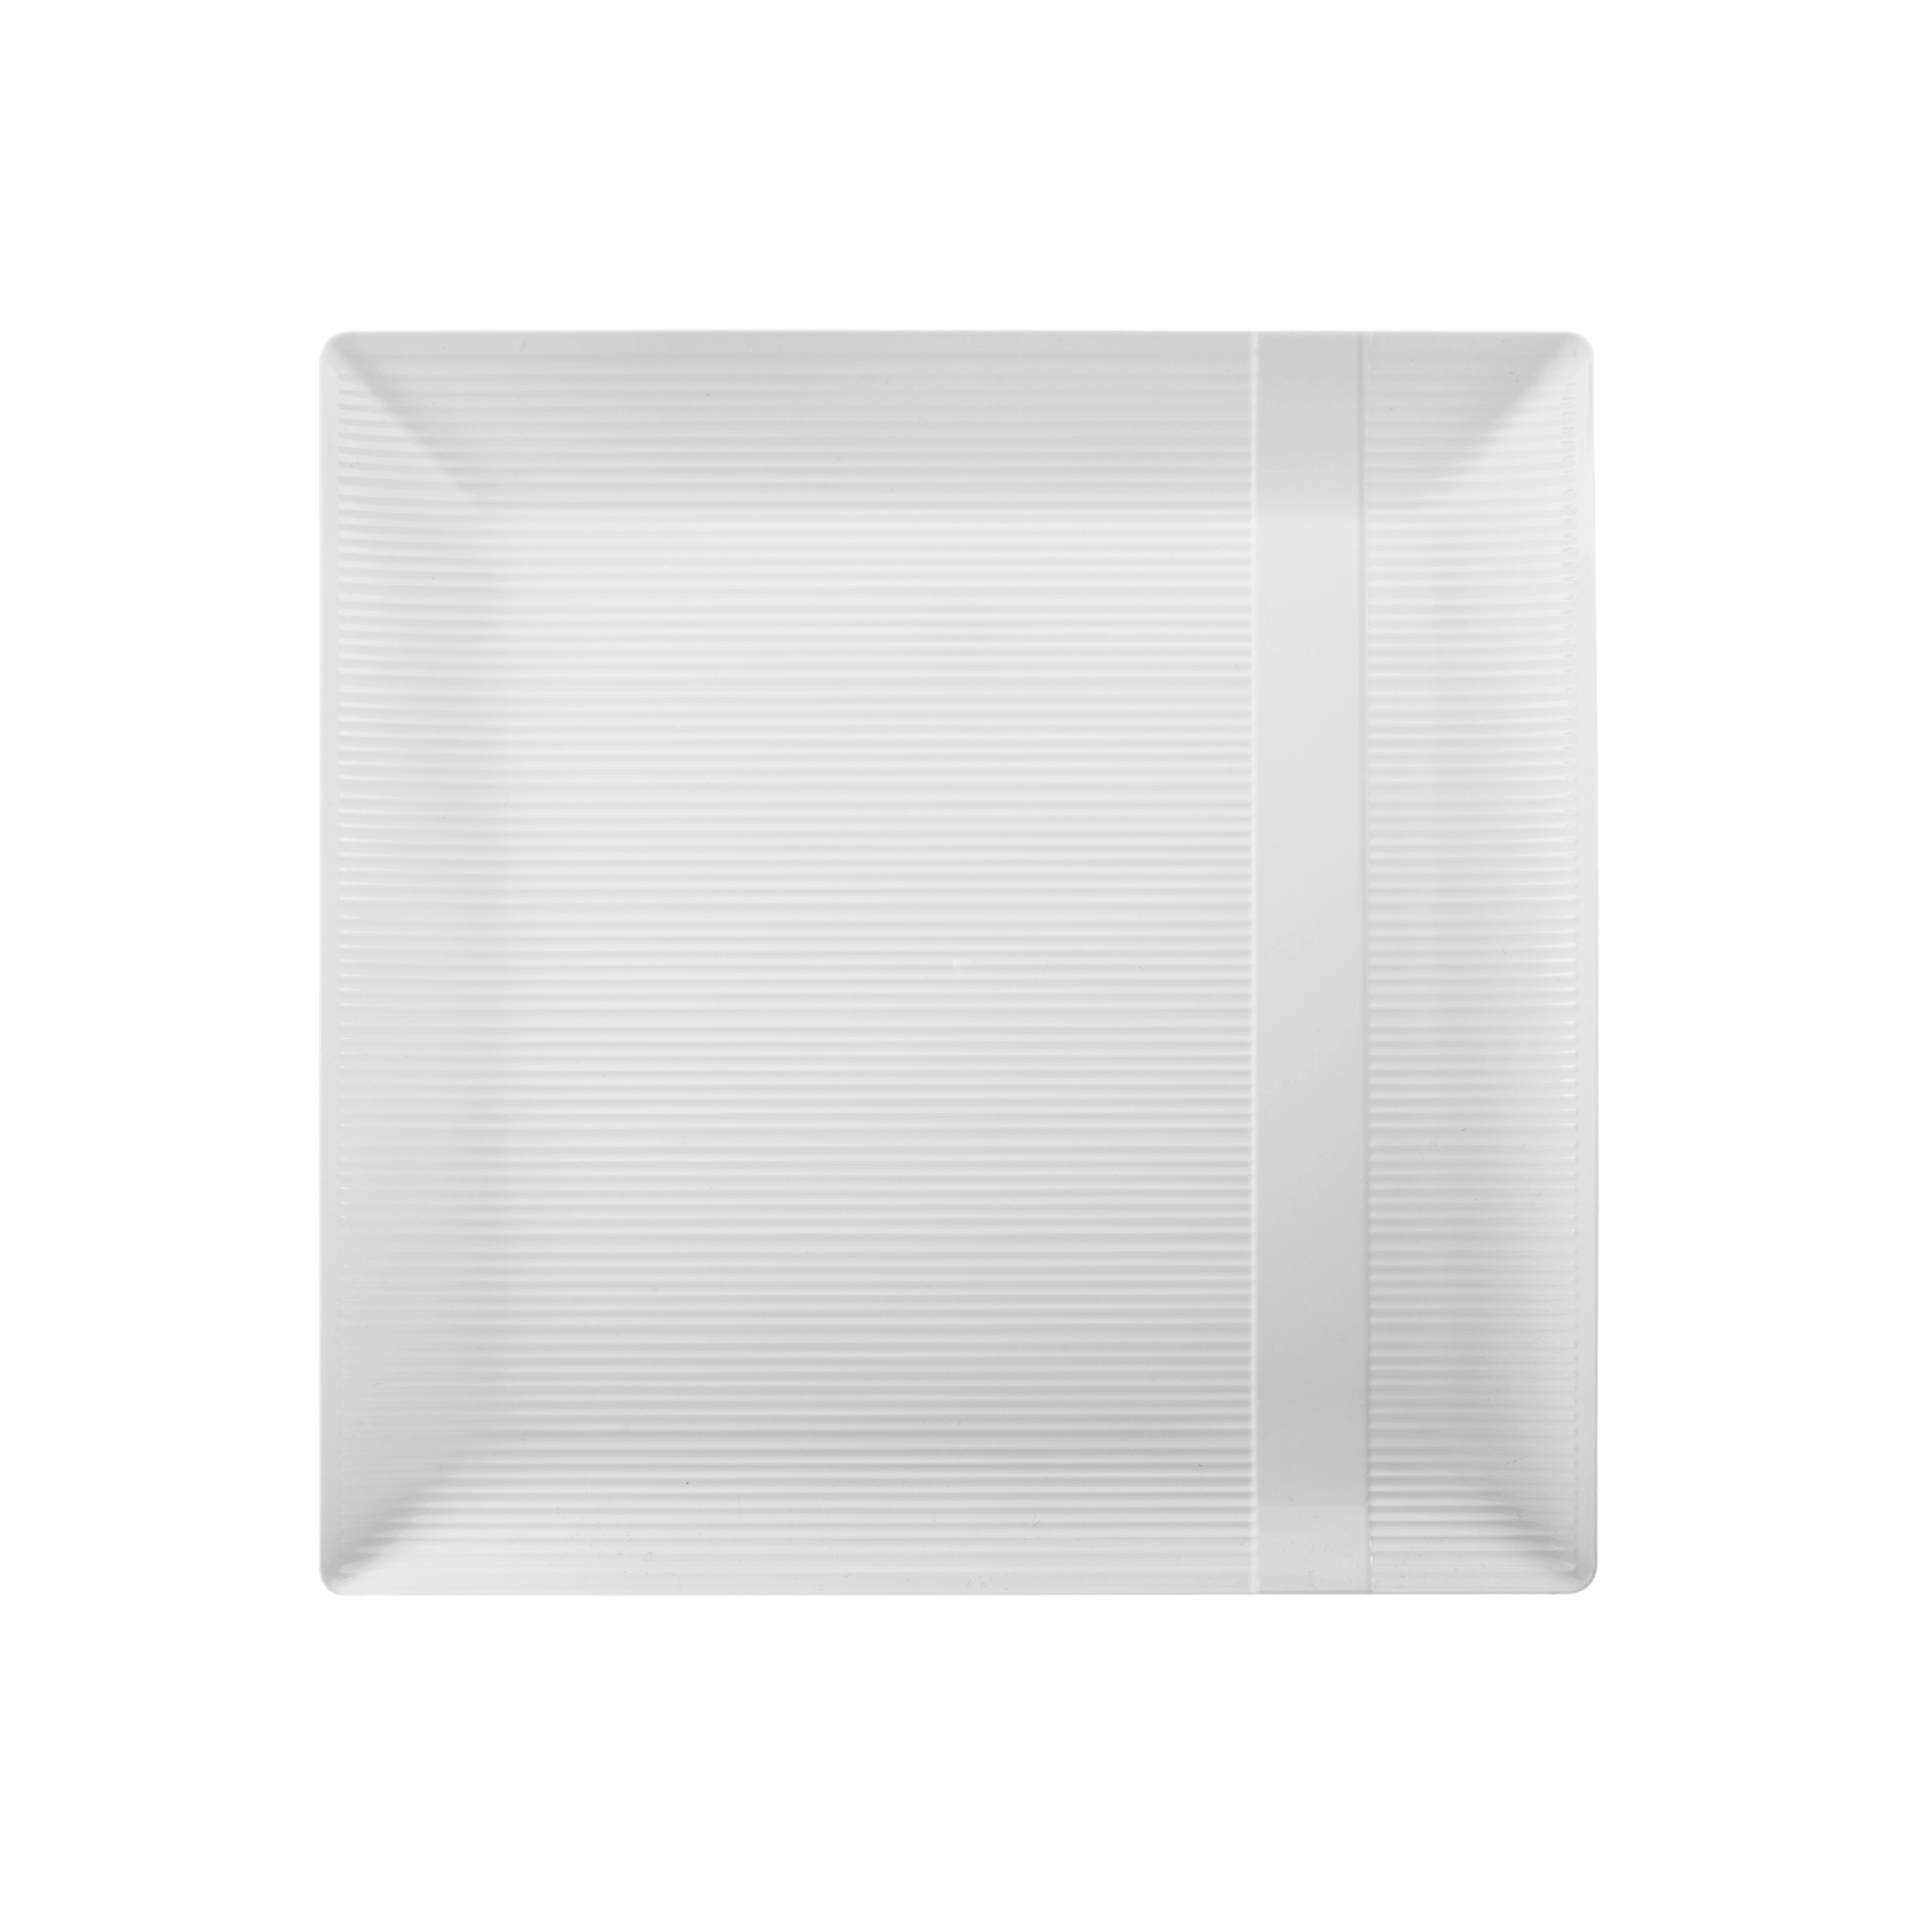 9" Zen Ridged White Square Plastic Plates (120 Count) - Yom Tov Settings